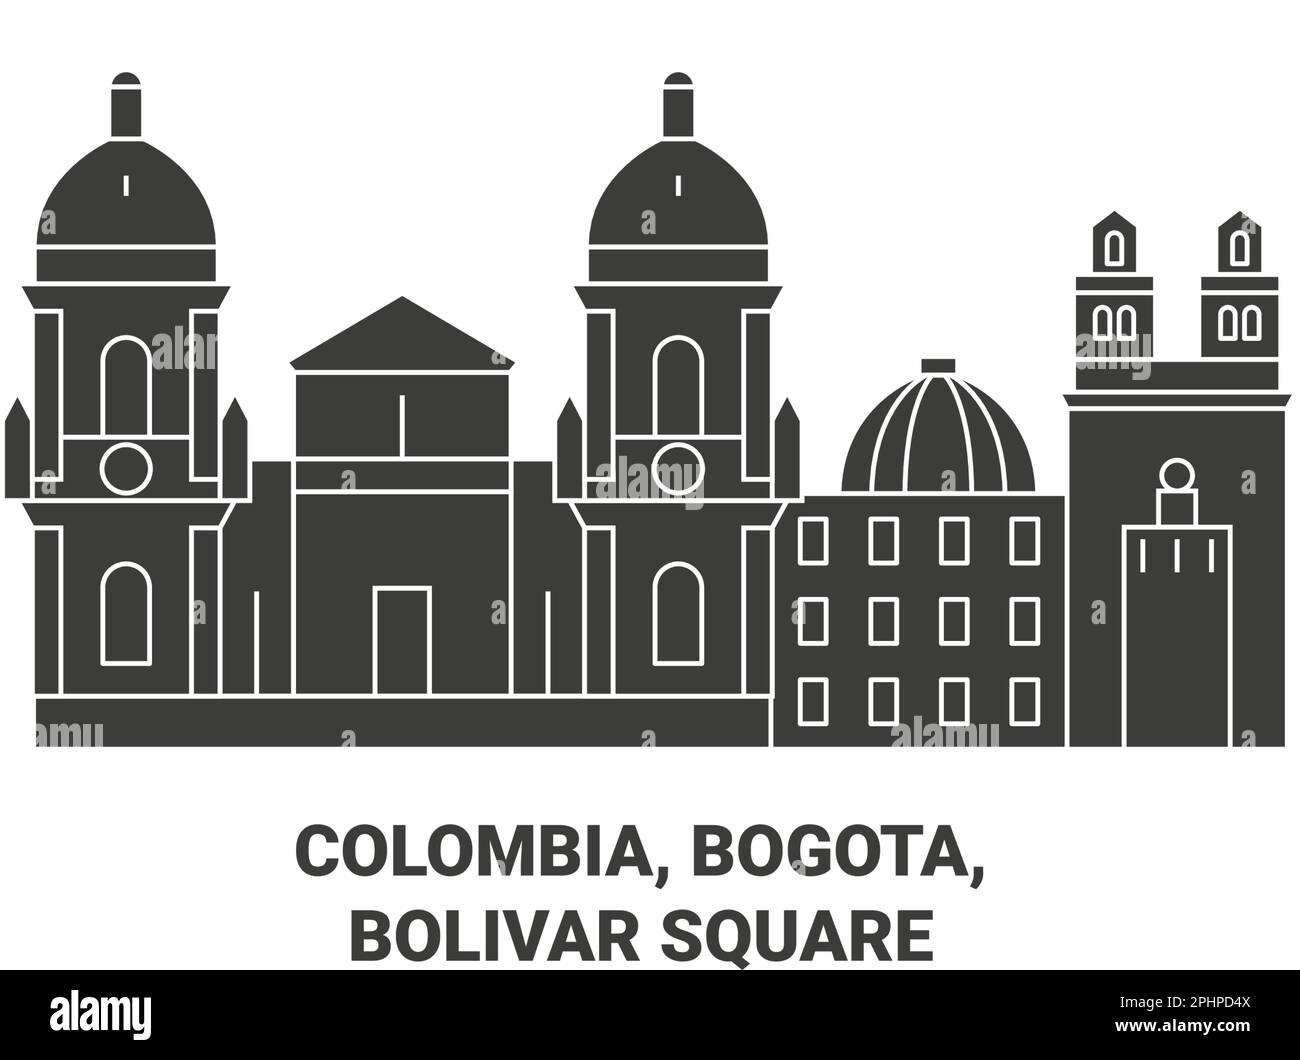 Colombia, Bogota, Bolivar Square travel landmark vector illustration Stock Vector